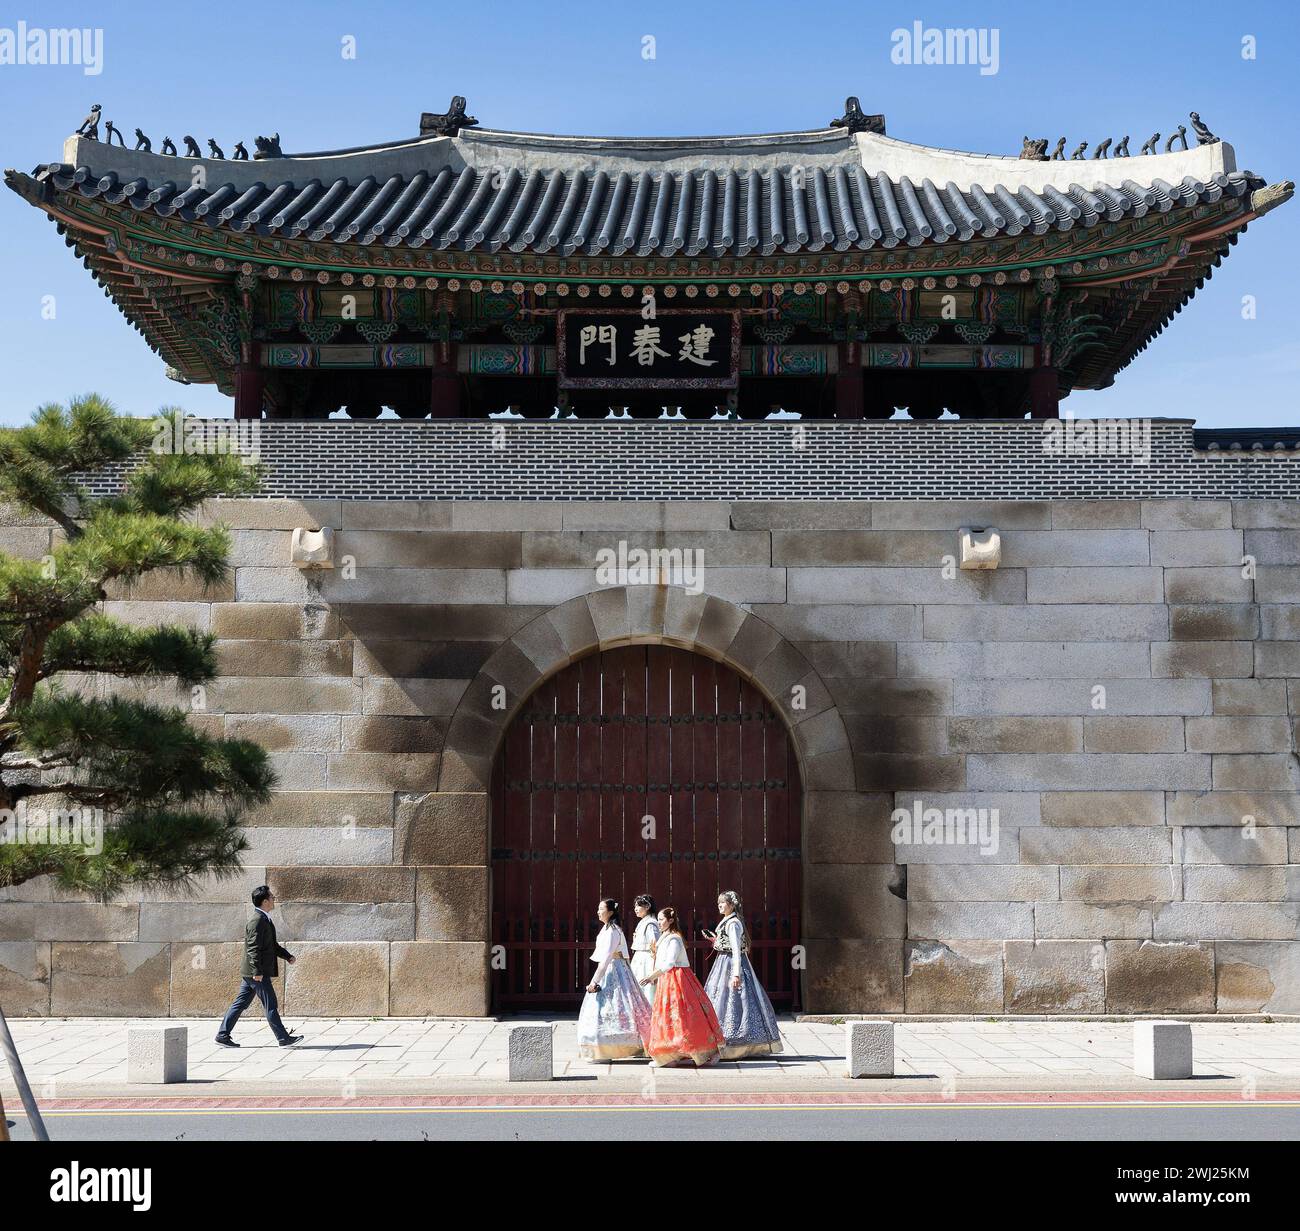 SEOUL - Gates of the Gyeongbokgung Palace in the city of Seoul, South Korea Stock Photo